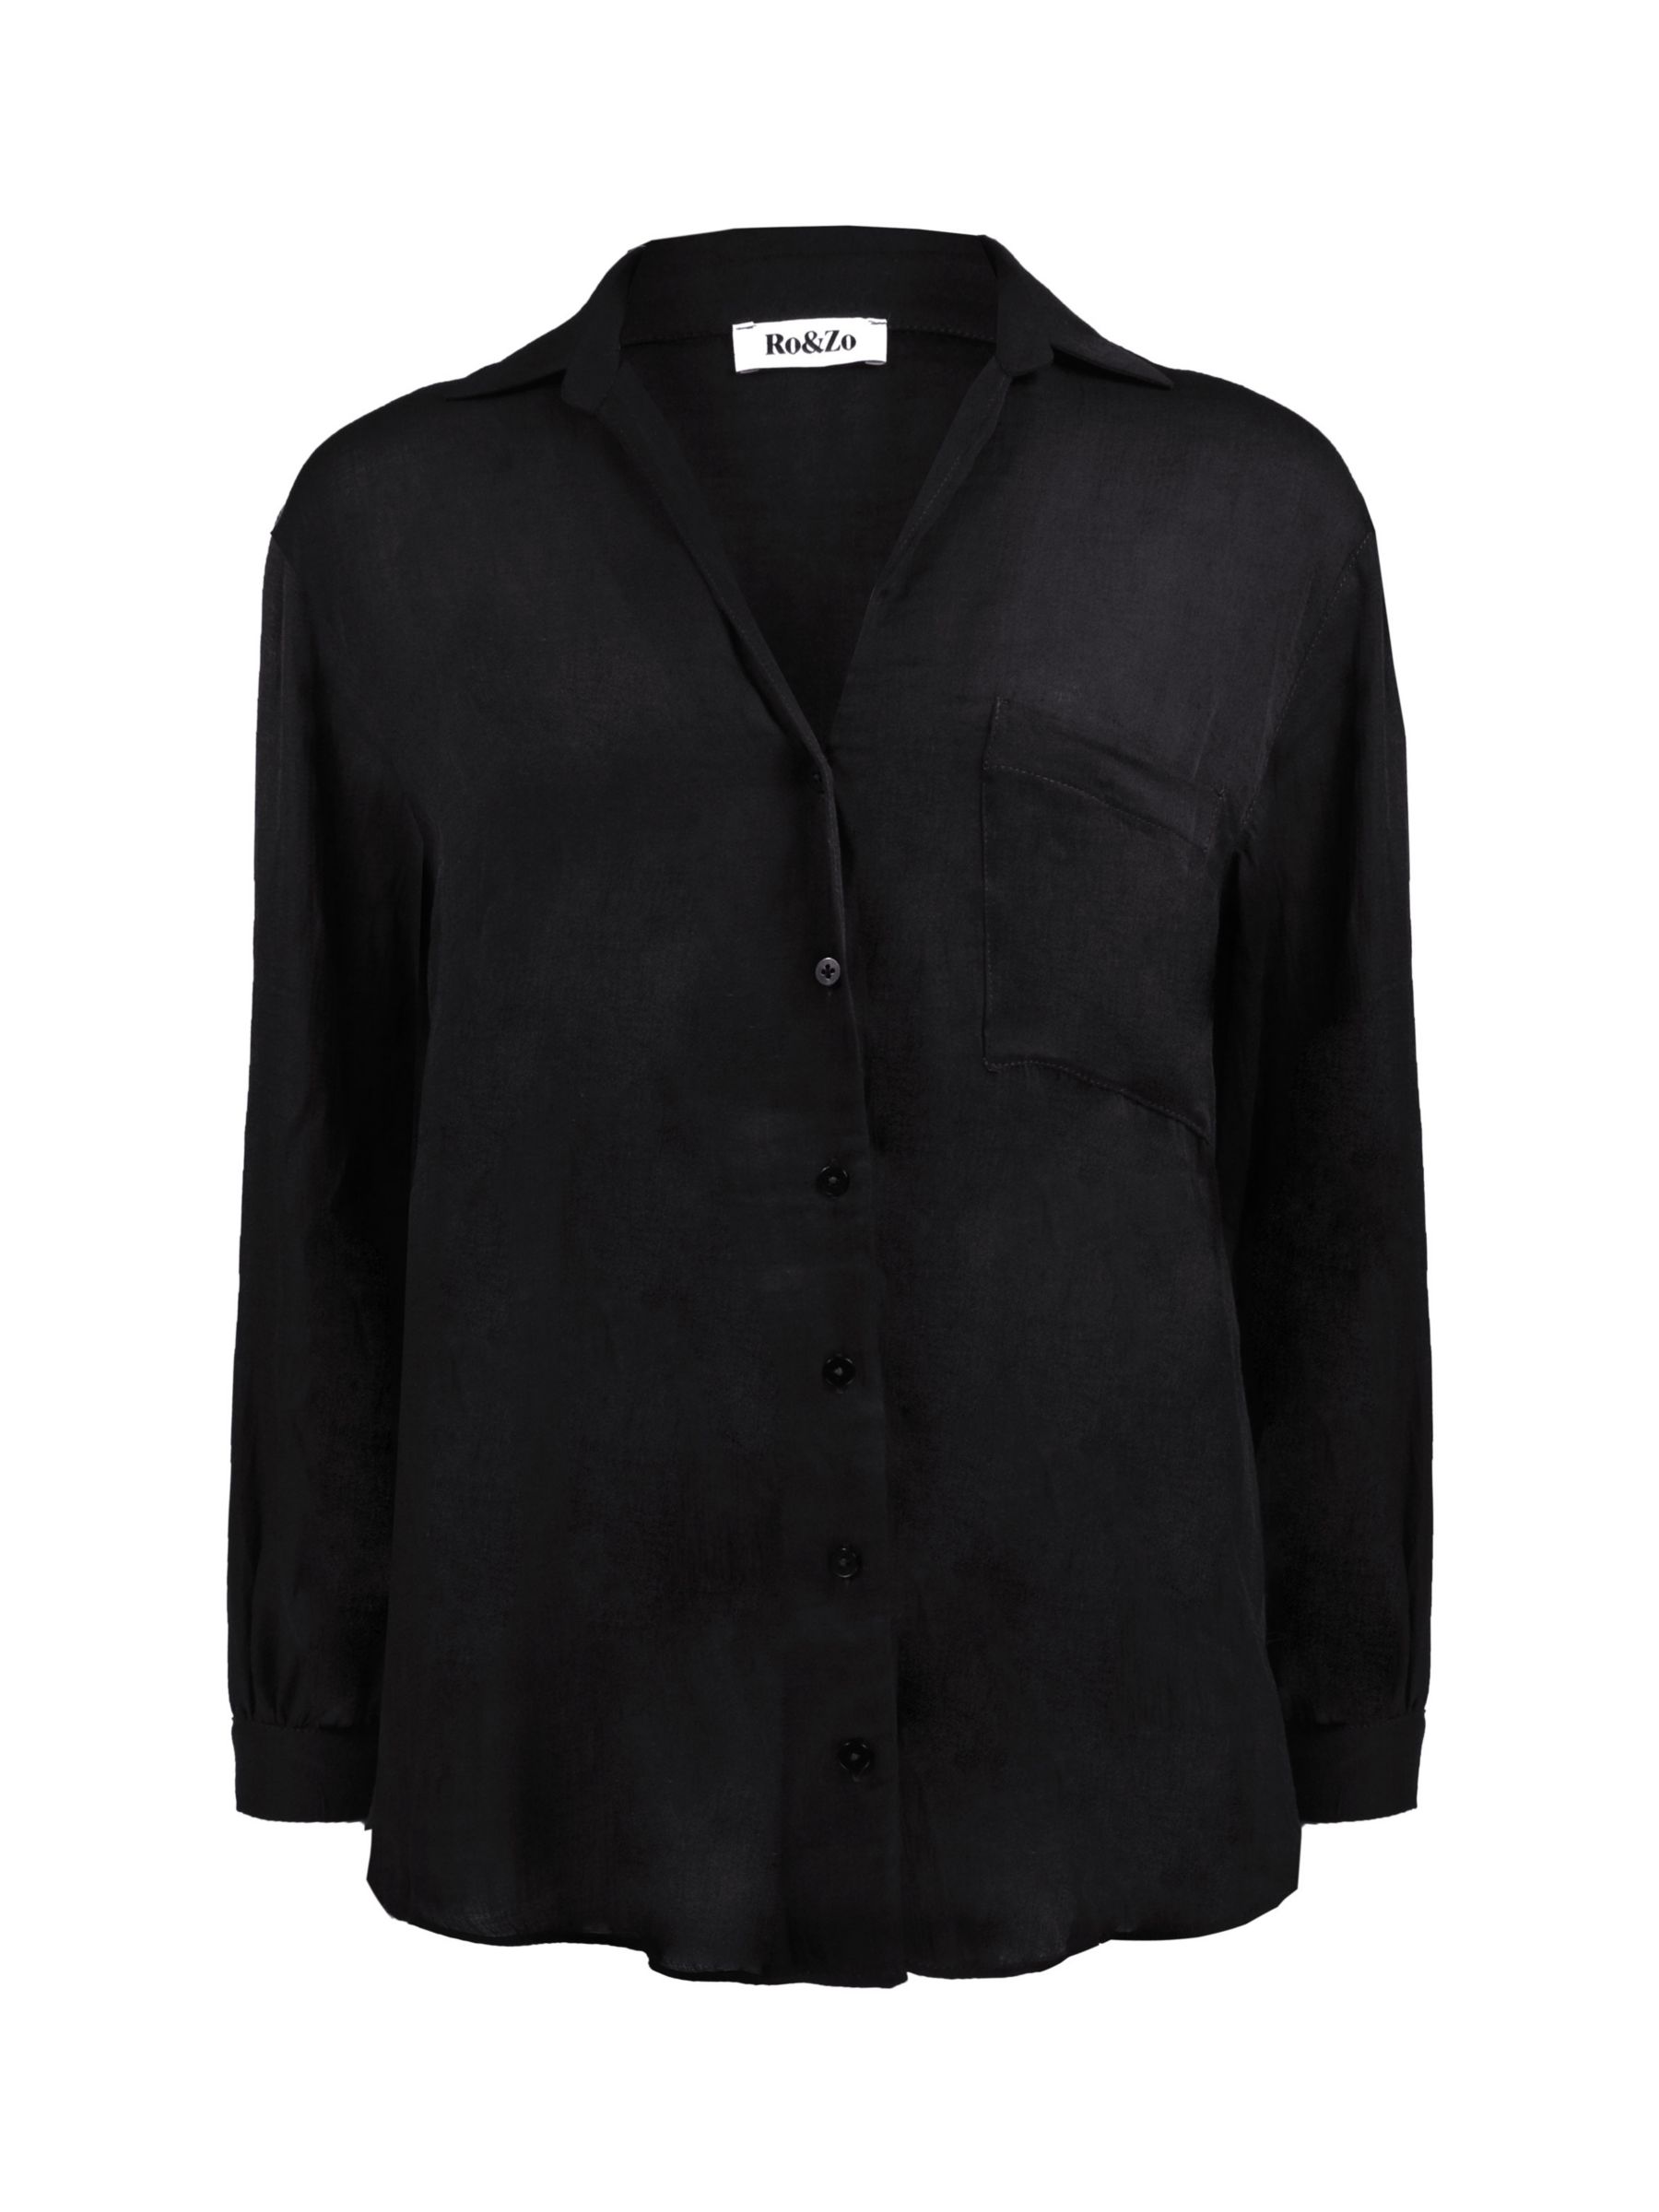 Ro&Zo Ruffle Relaxed Fit Shirt, Black at John Lewis & Partners